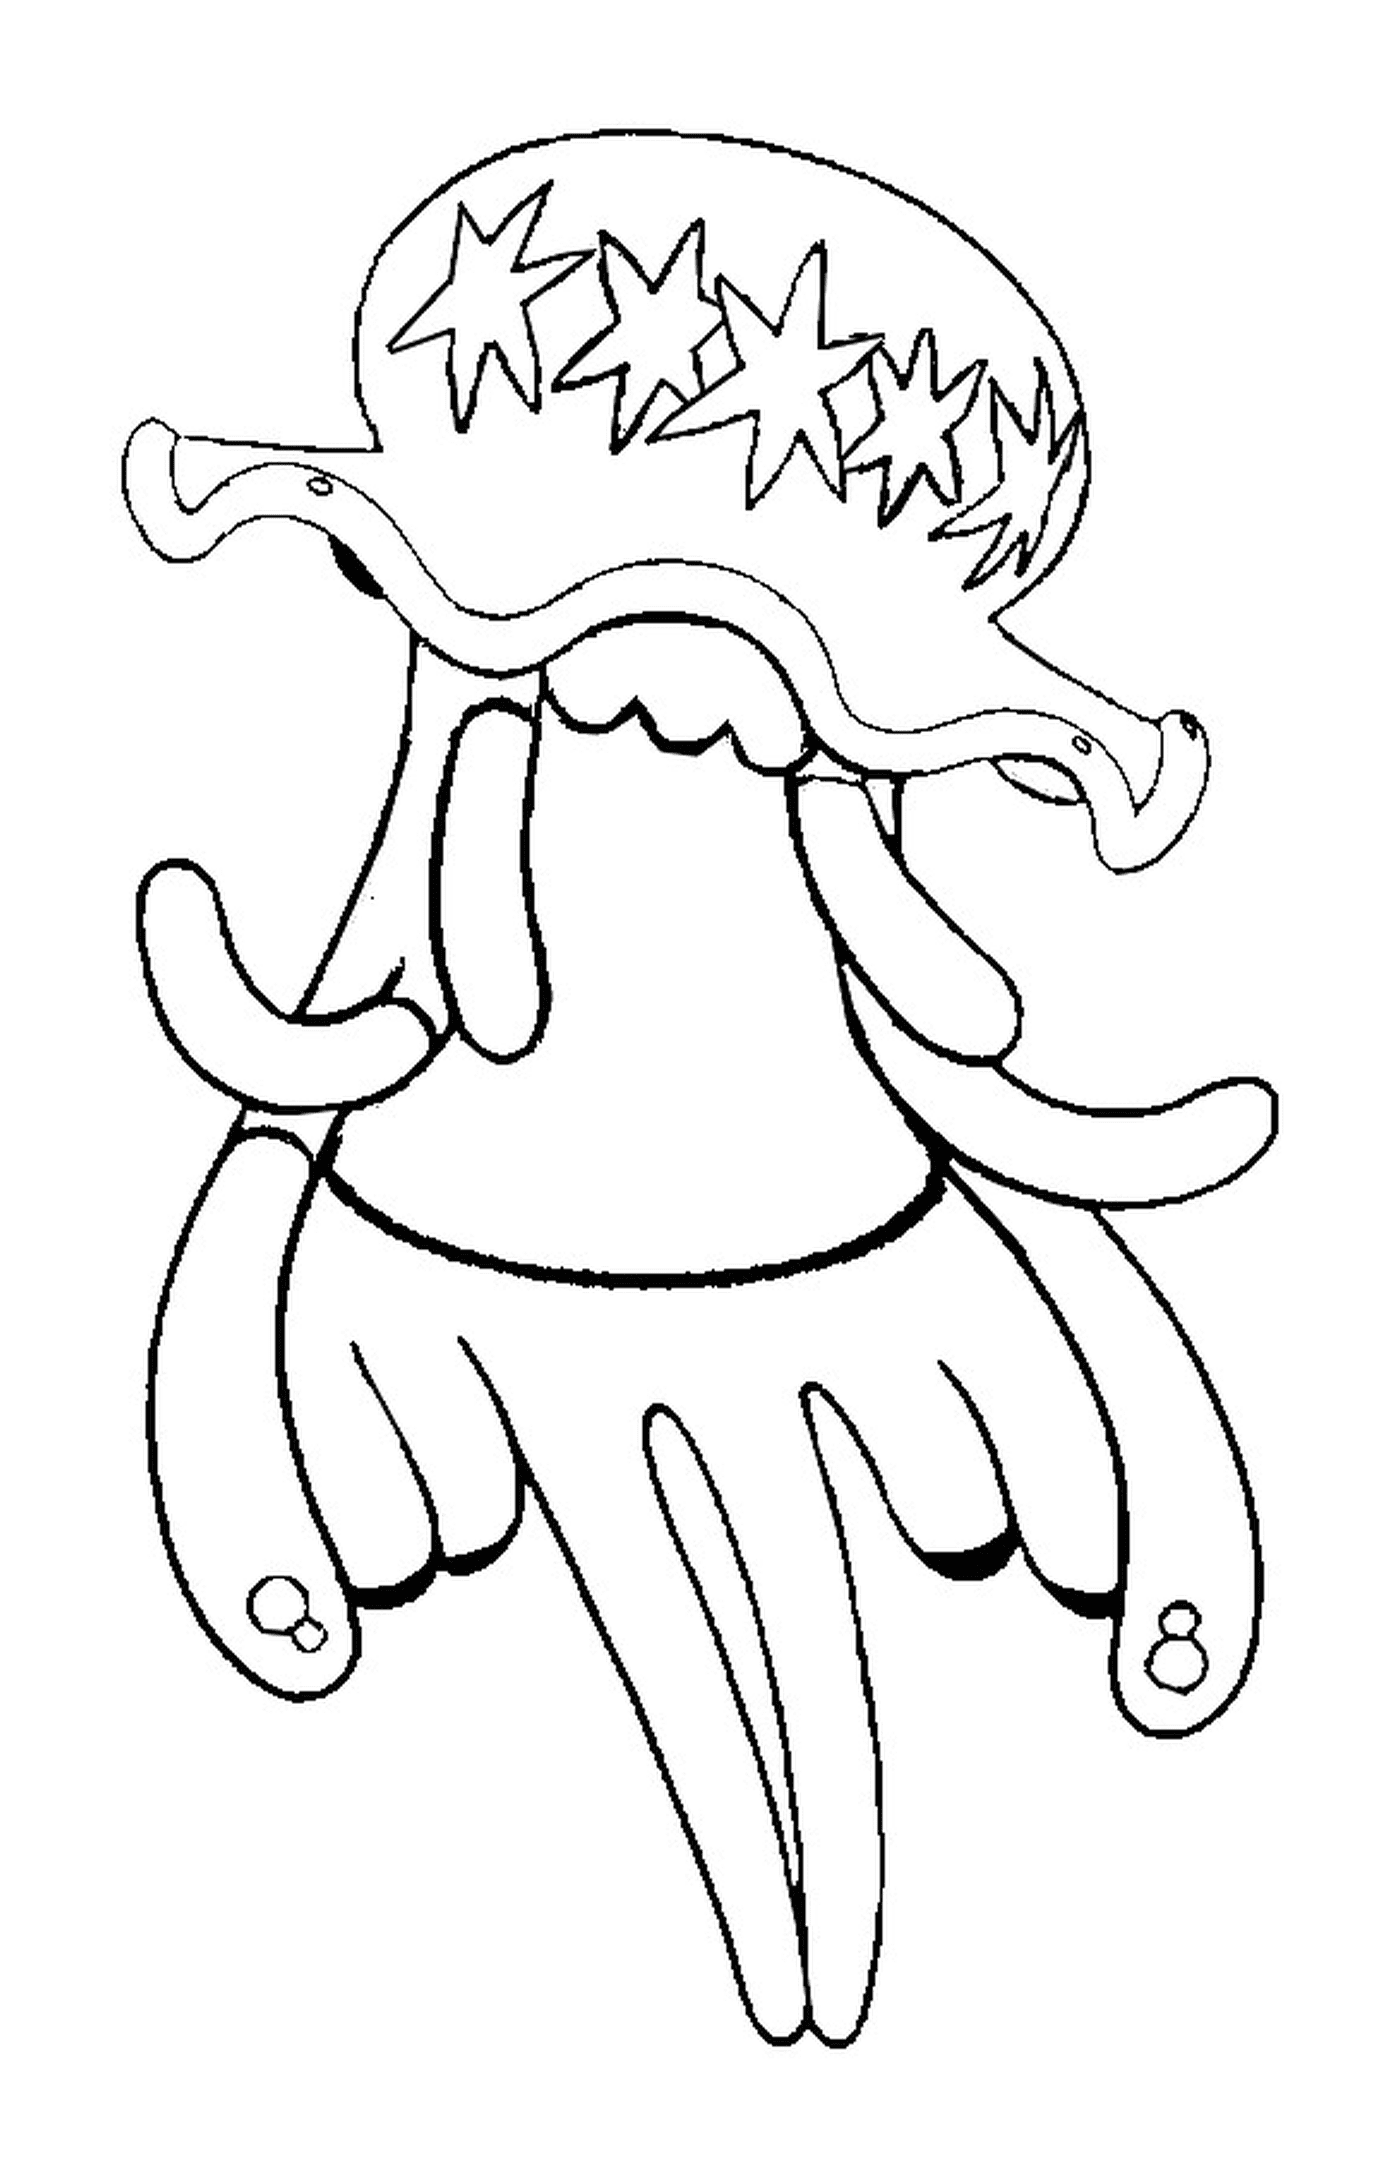  UB 01,长长的触角章鱼 